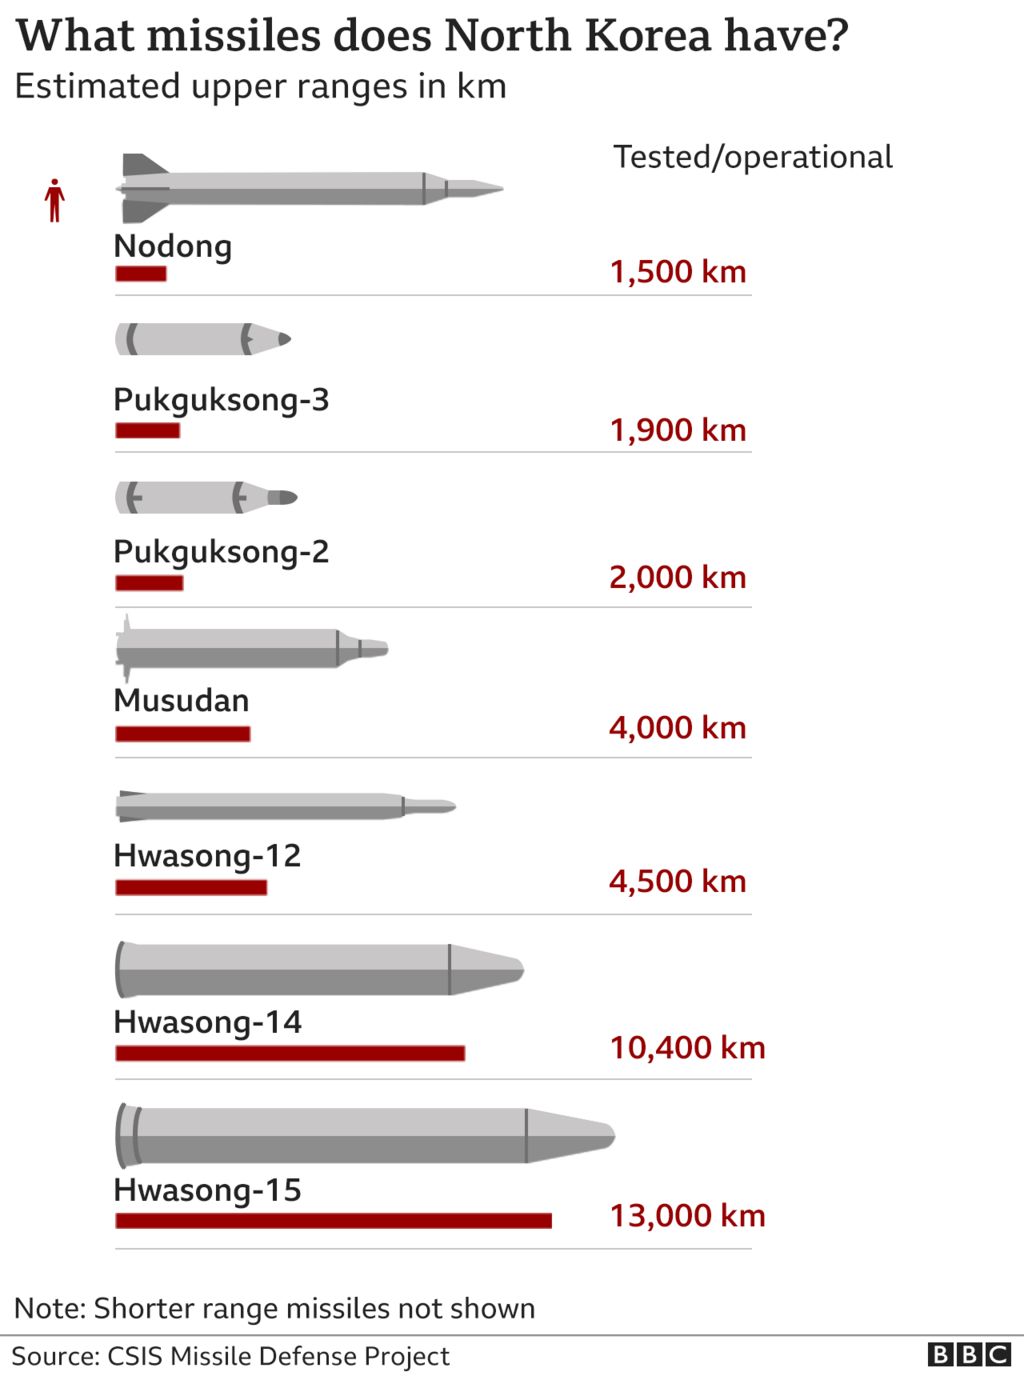 Graphic showing main longer-range missiles in North Korea